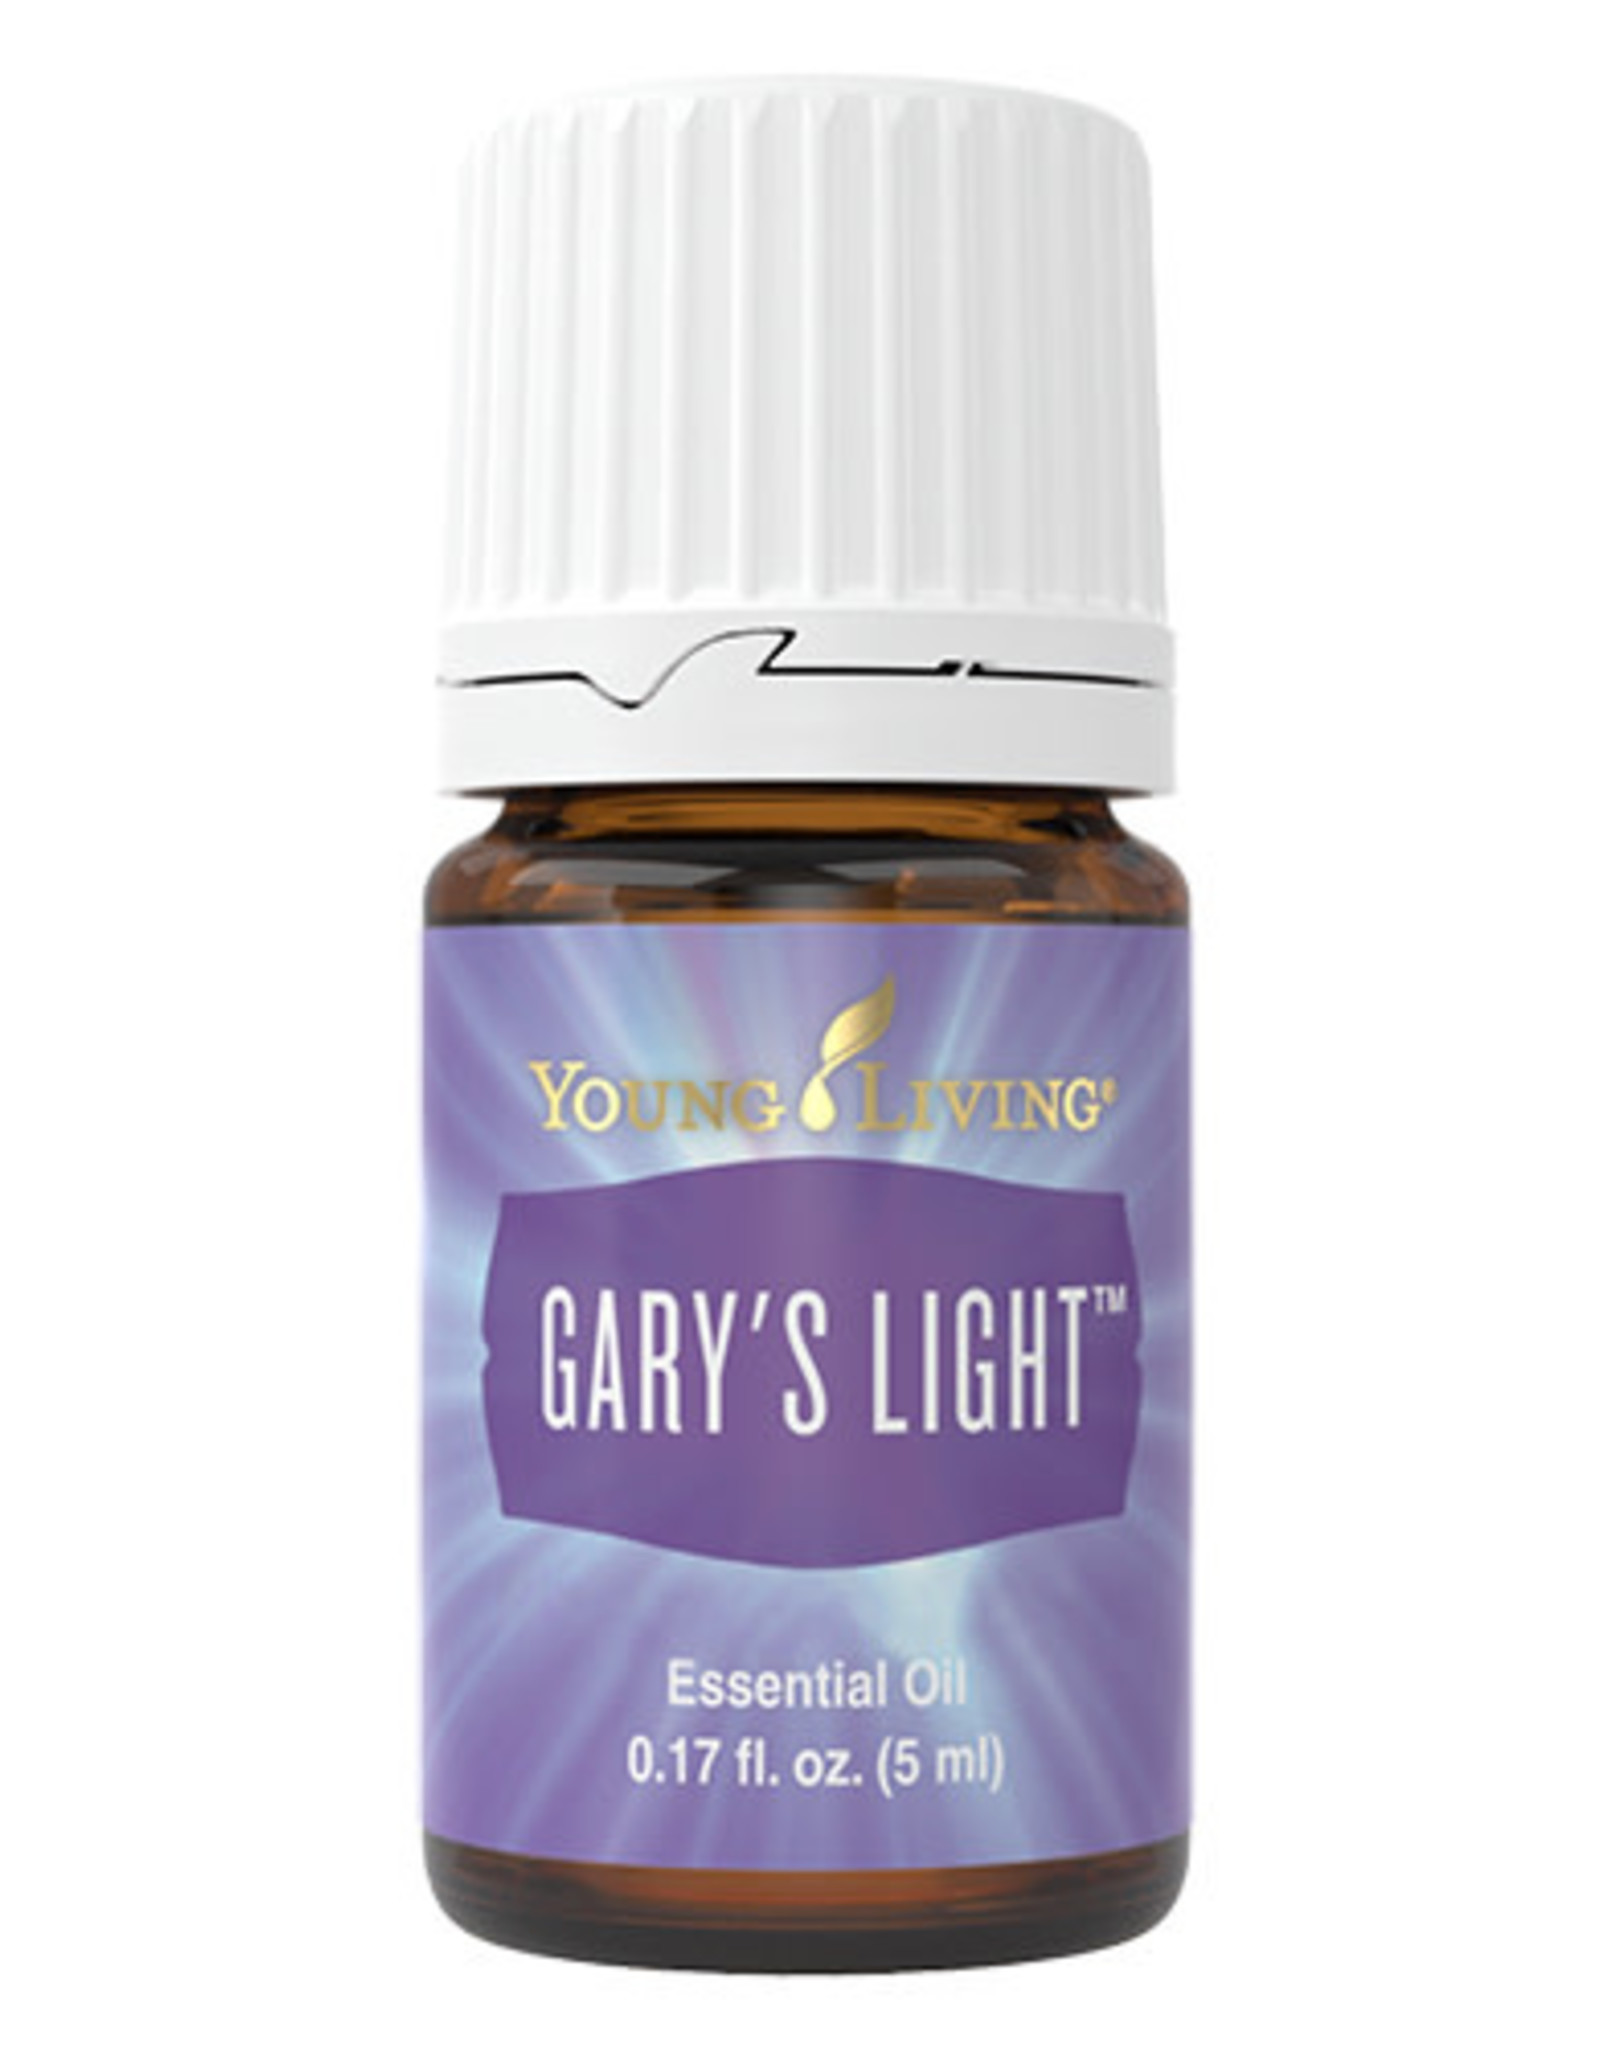 Young Living Gary's Light Oil Blend